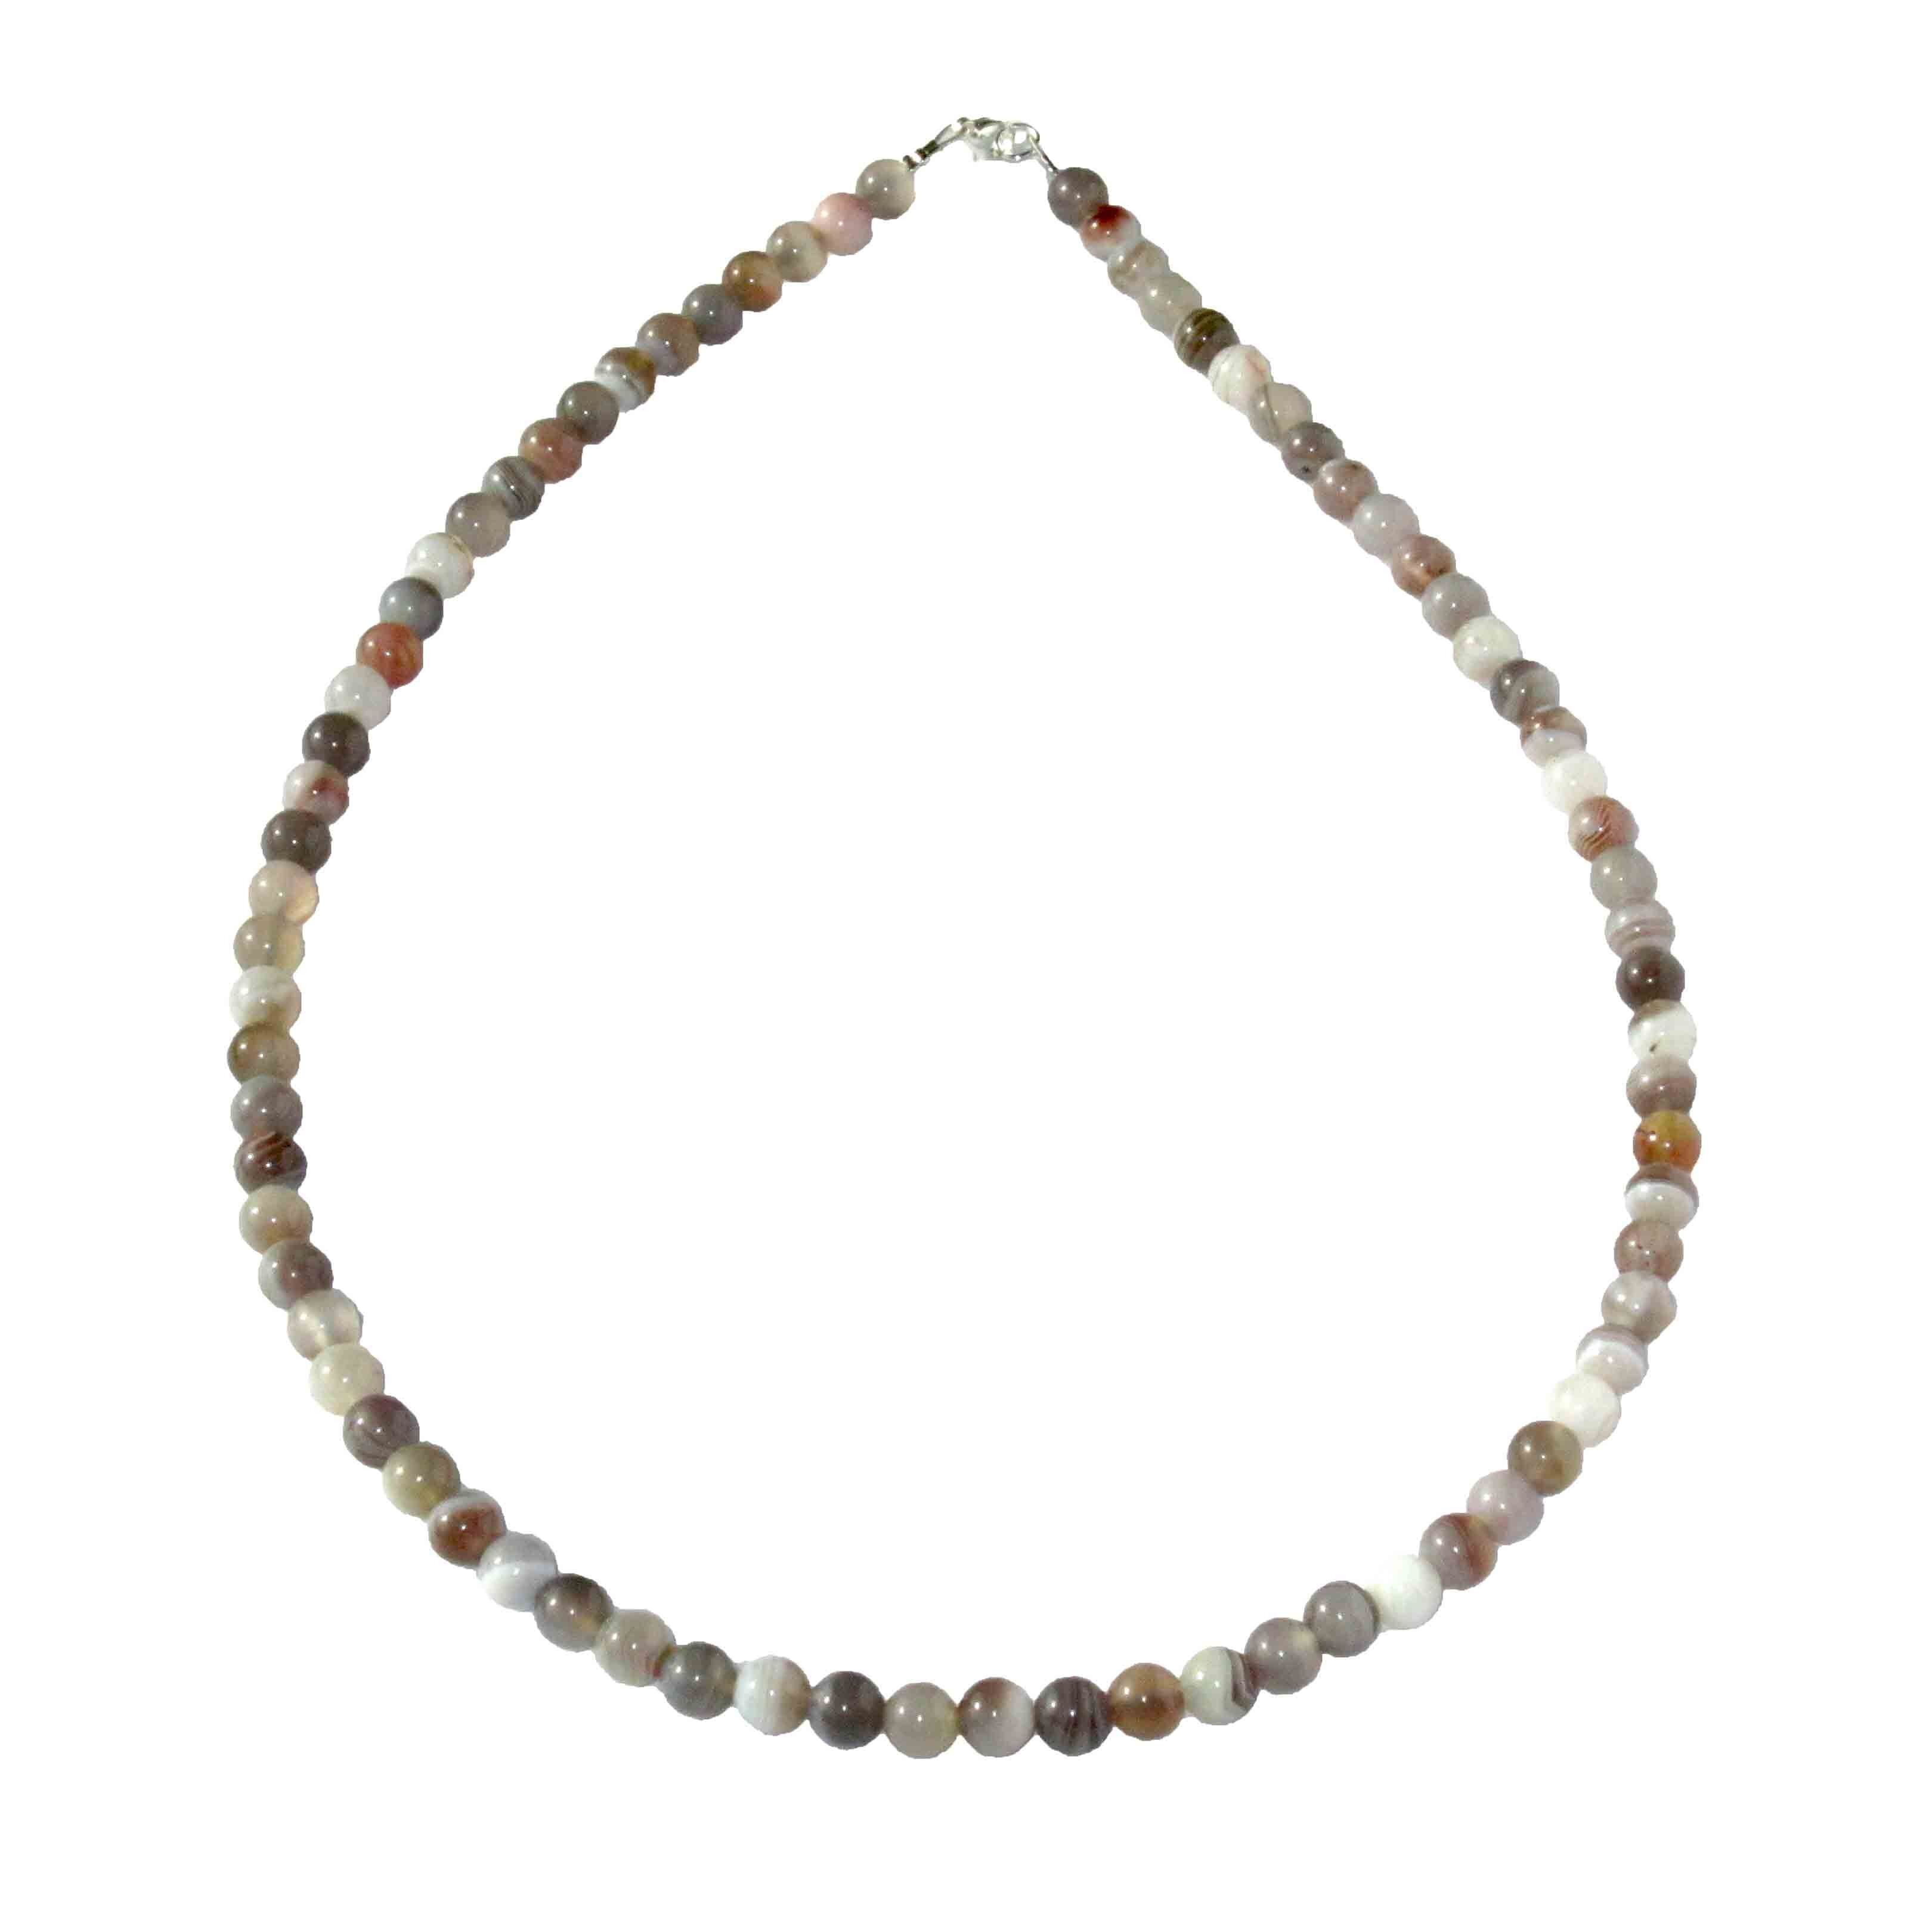 Buy wholesale Botswana Agate necklace - 6mm ball stones - 42 cm